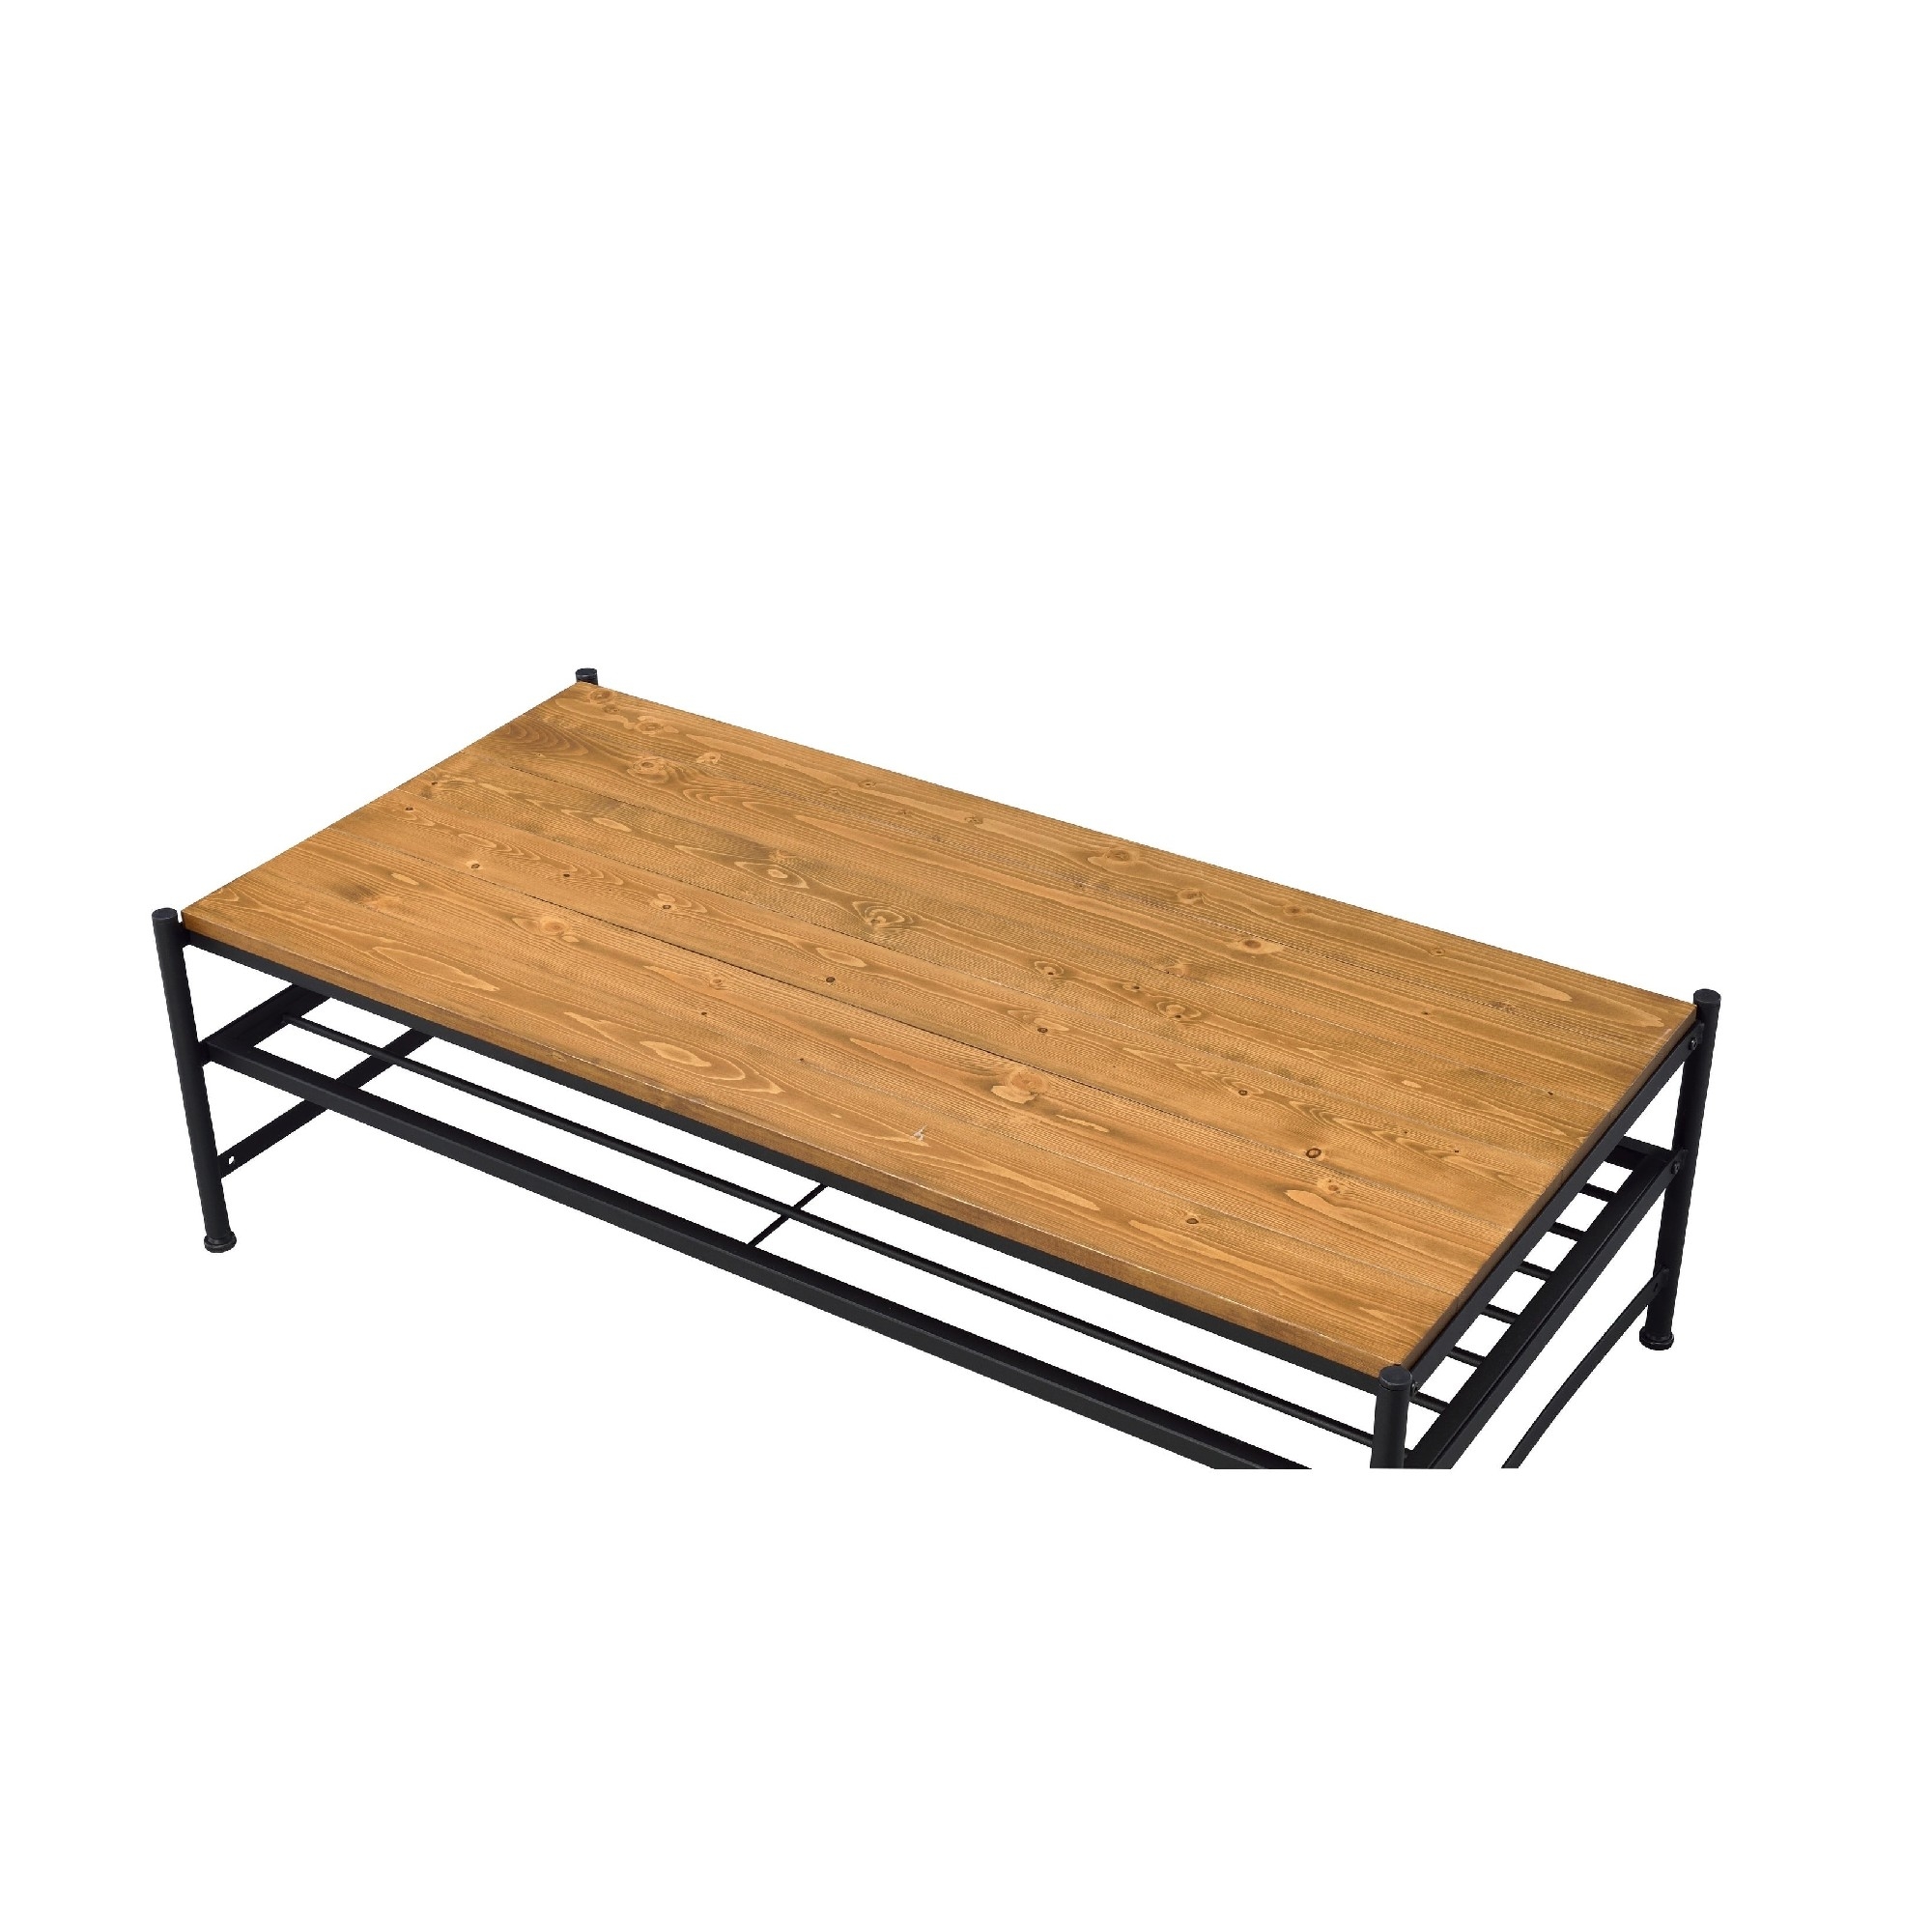 Metal And Wood Coffee Table With Slatted Bottom Shelf,Brown And Black- Saltoro Sherpi